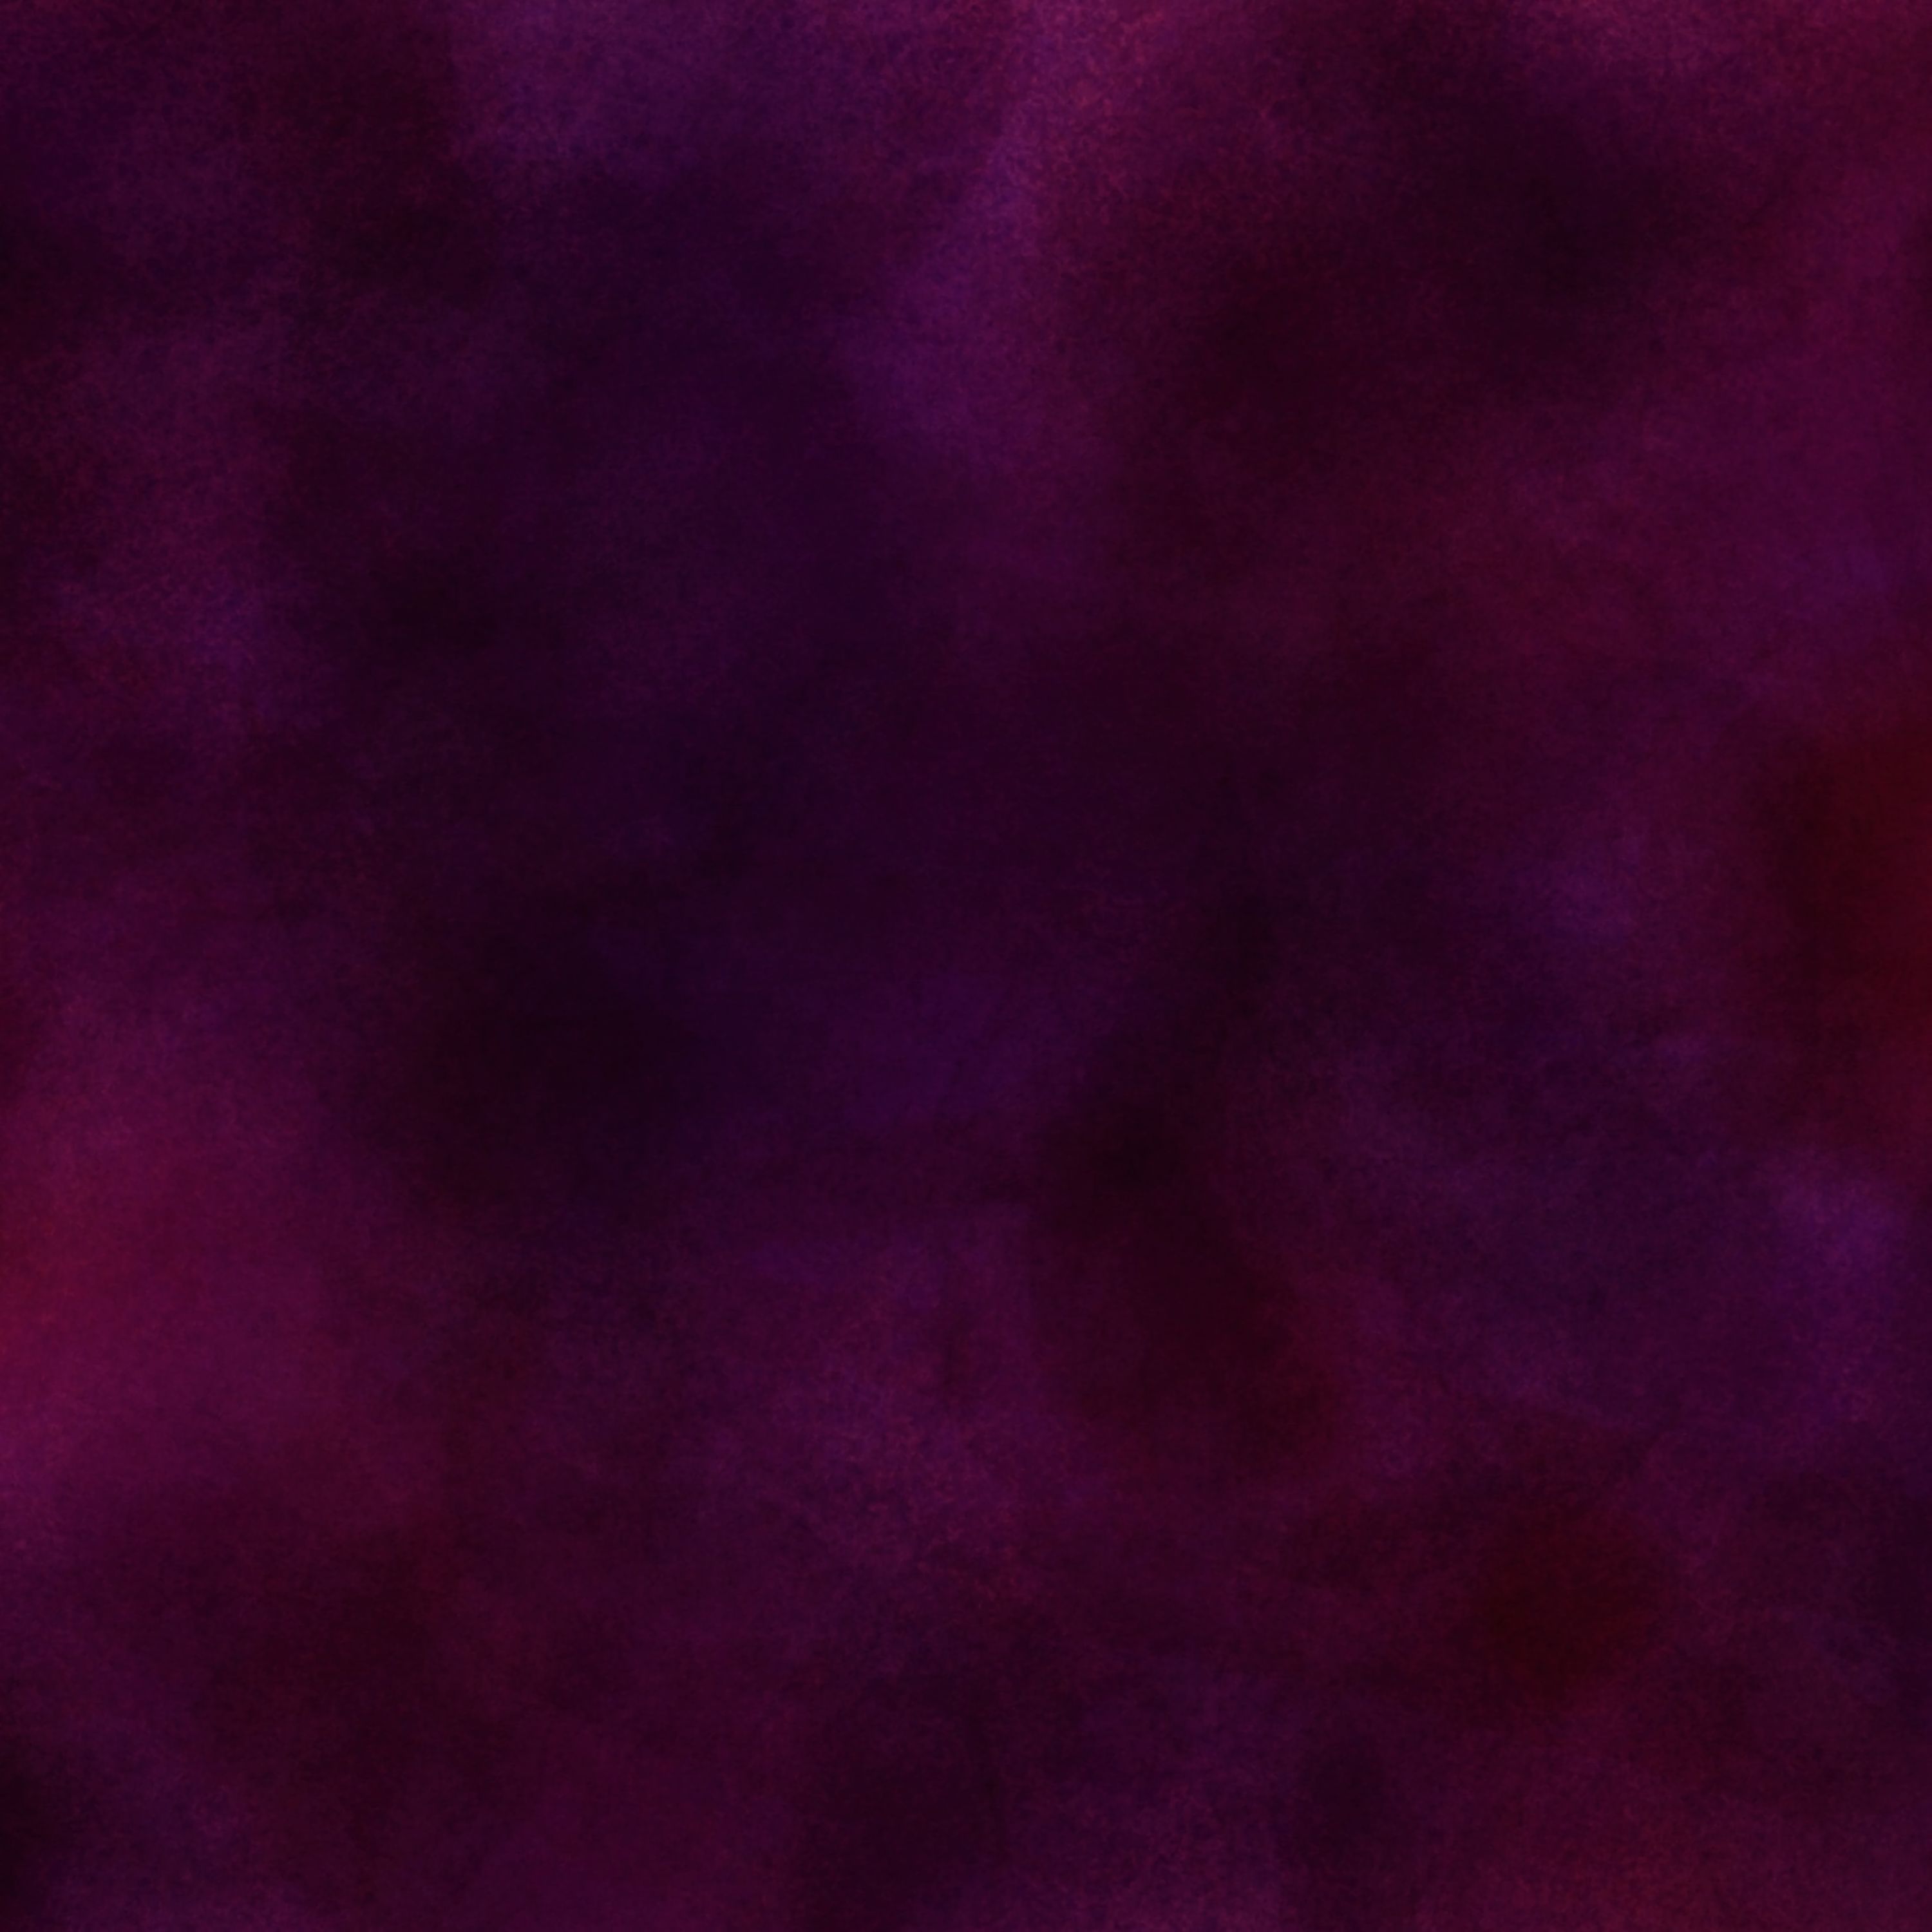 textures, violet, dark, texture, stains, spots, purple 1080p